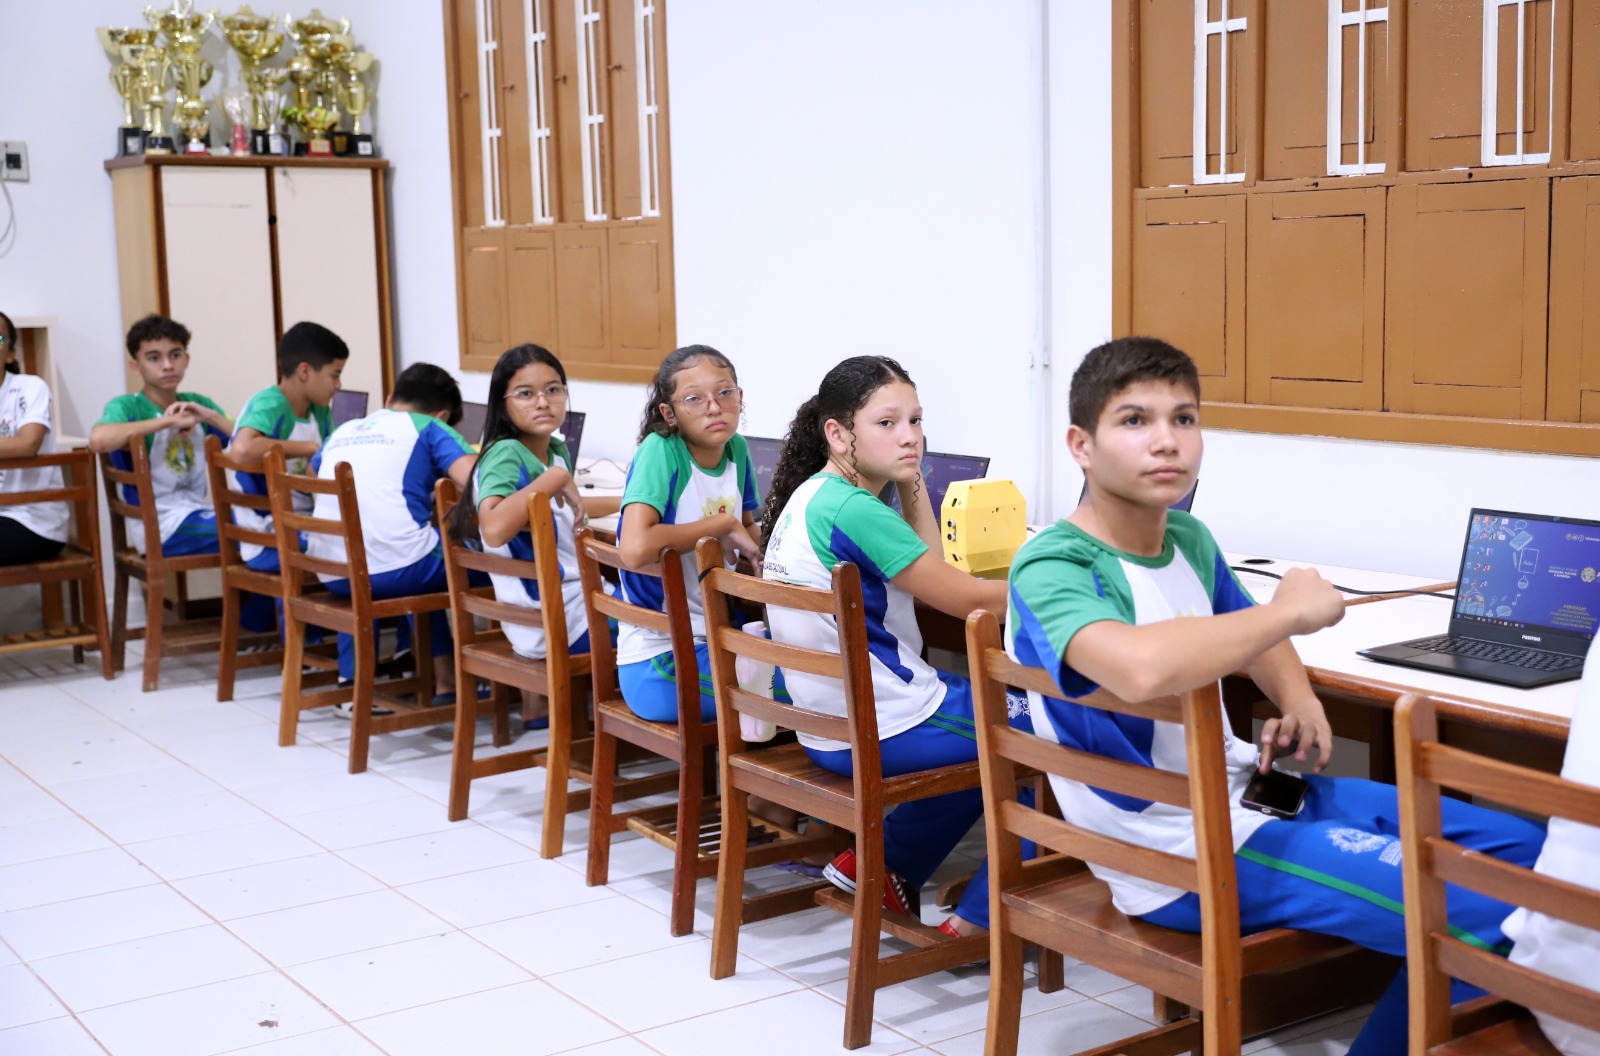 Manaus recebe a primeira unidade da MK+ Academy, considerada a maior escola  de desenvolvimento de games do país - Mercadizar